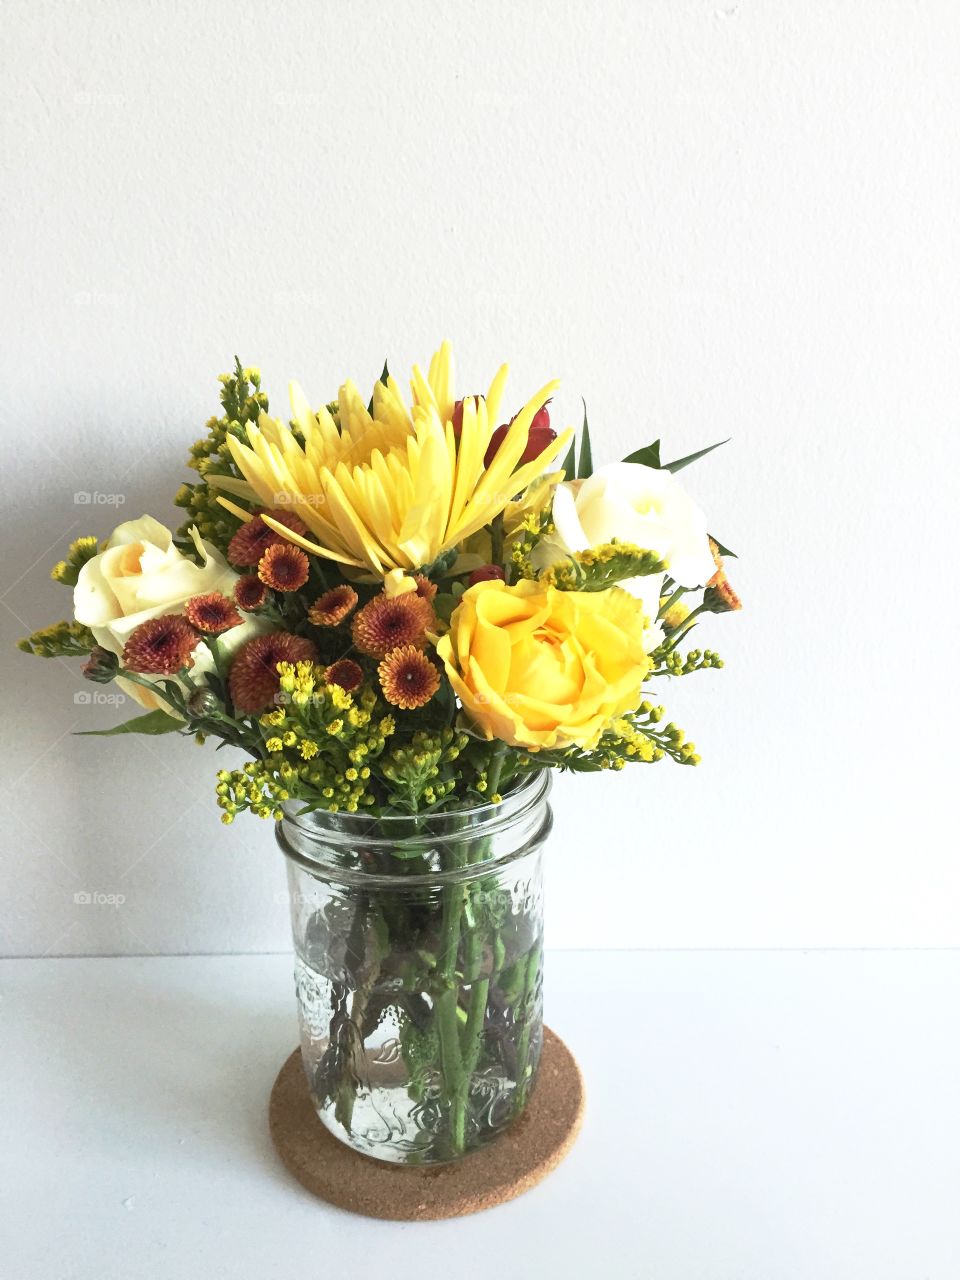 Flowers, mason jar, indoor, blank background, yellow roses, nature, plant, lifestyle 